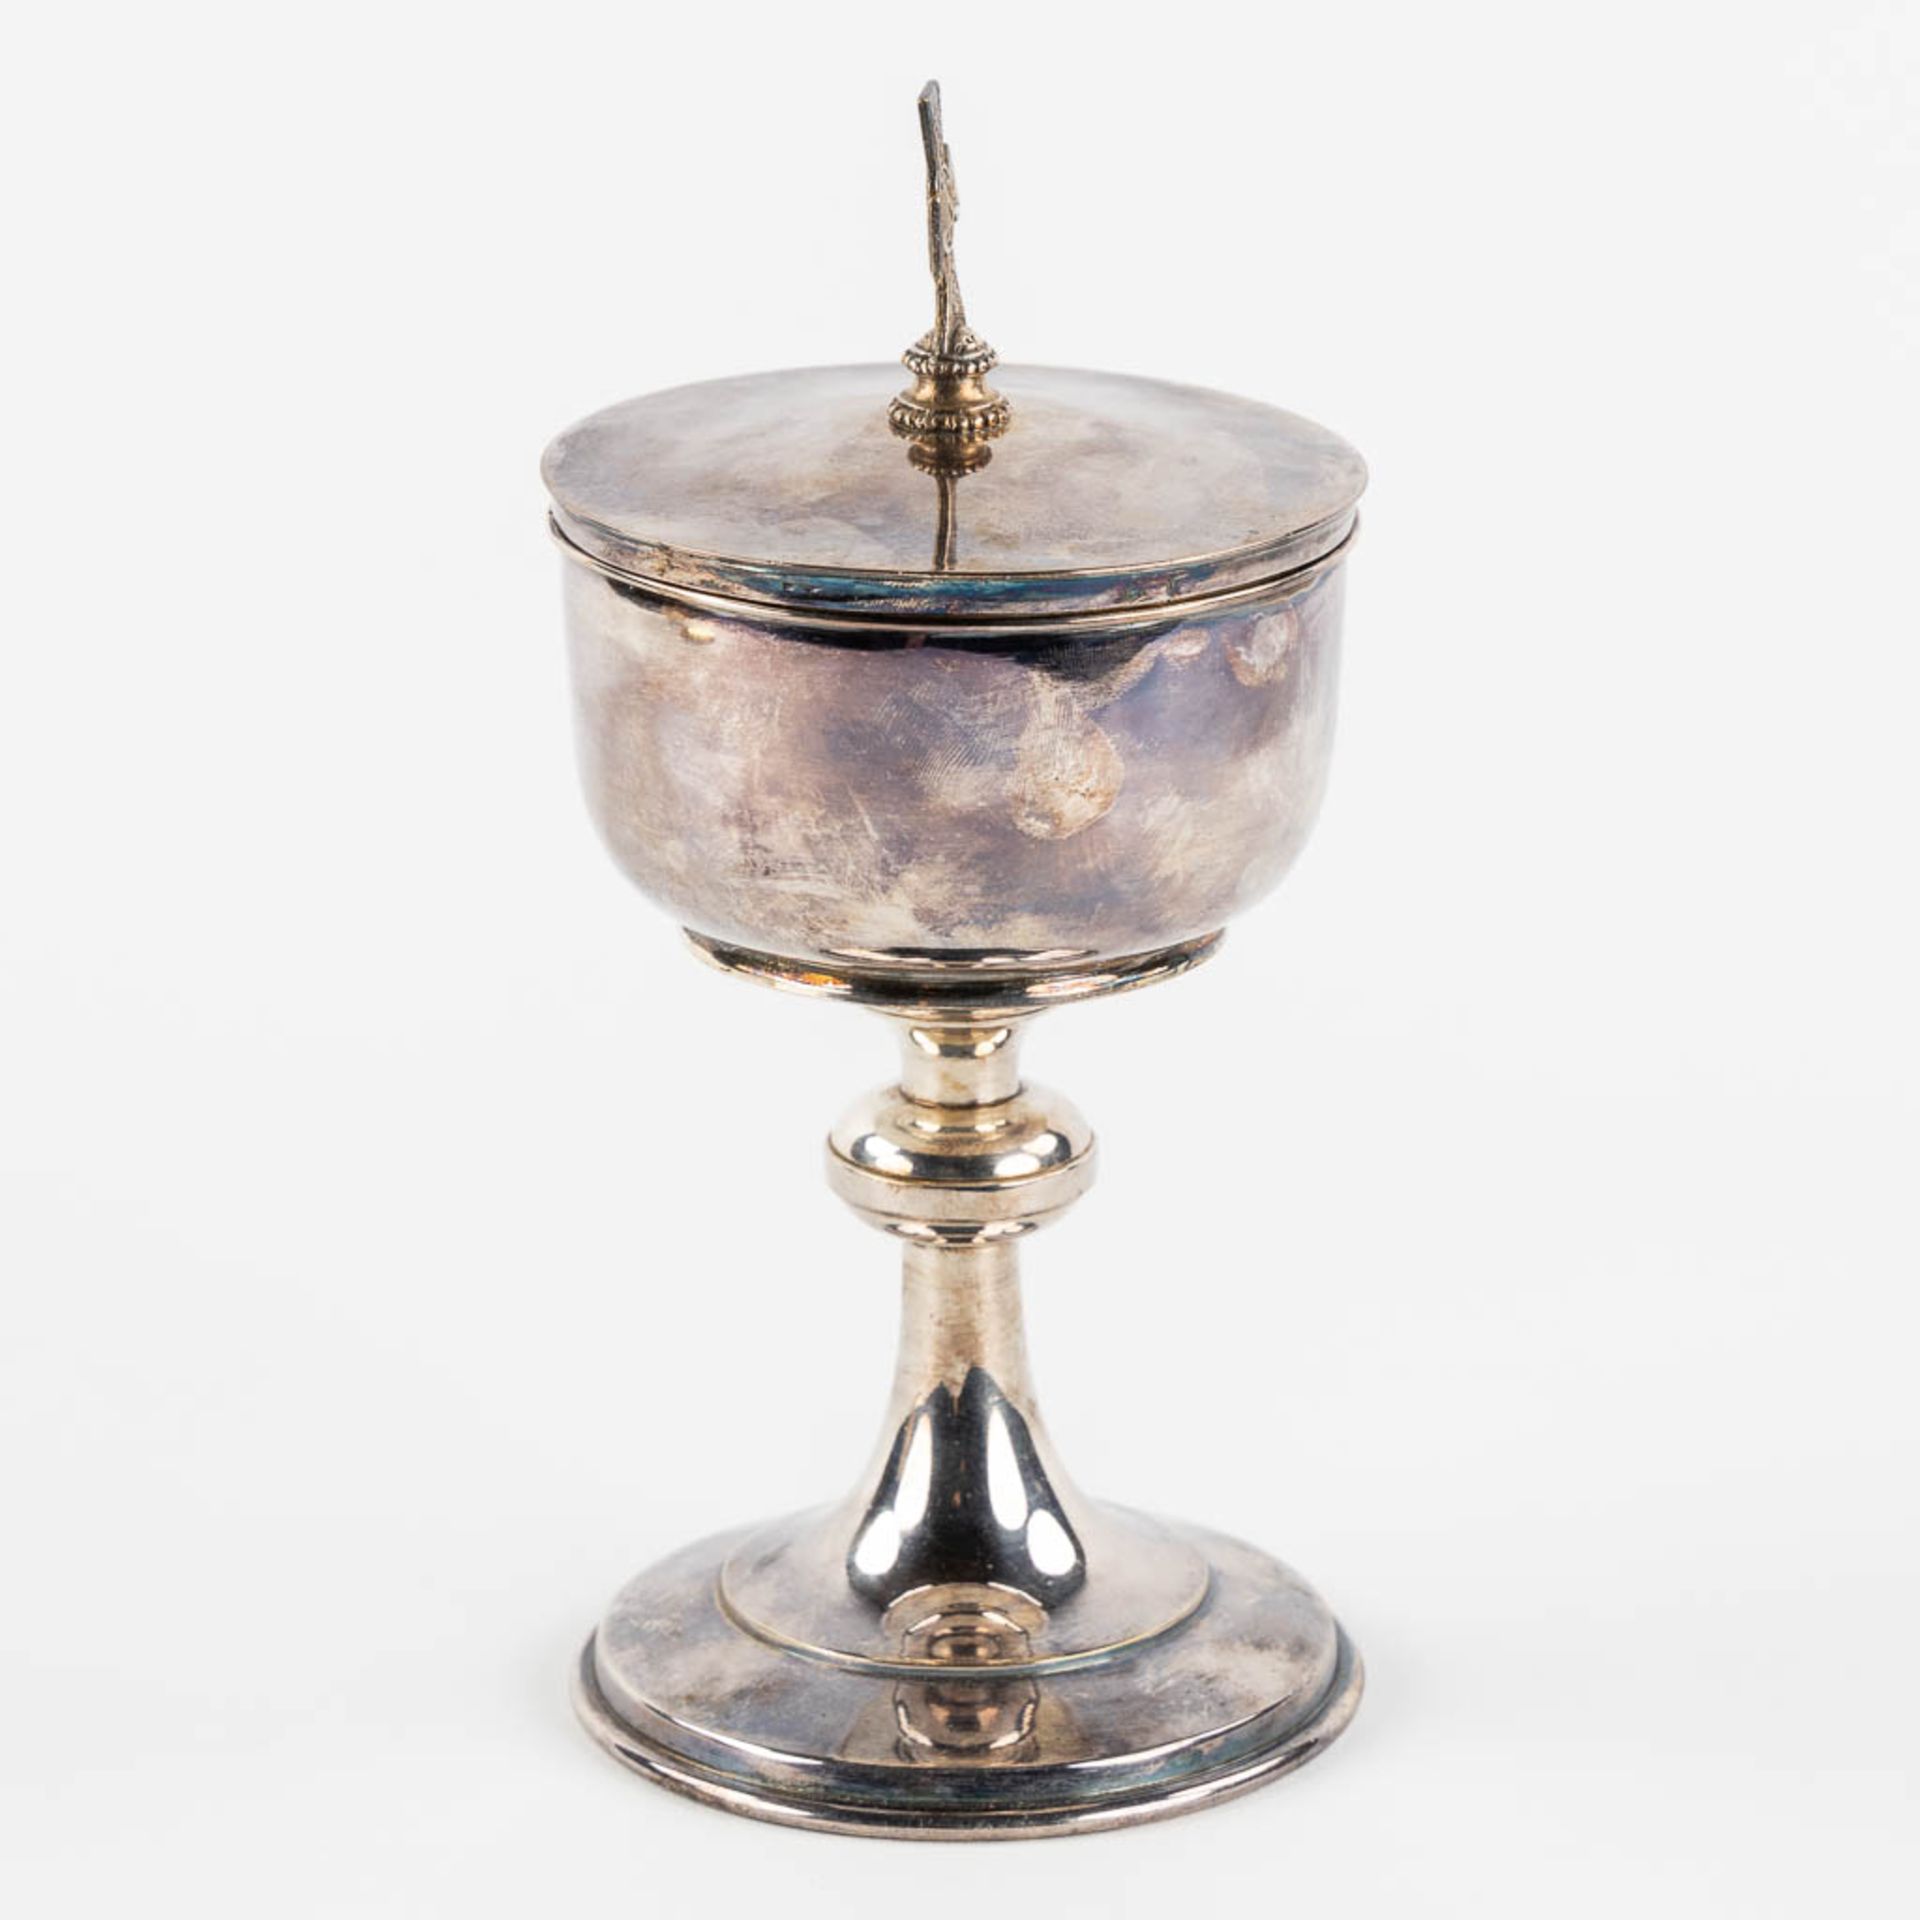 Carolus DE PAPE (1763-1840), A Ciboria, silver and silver-plated metal. Bruges, Belgium, 1832-1869. - Image 4 of 13